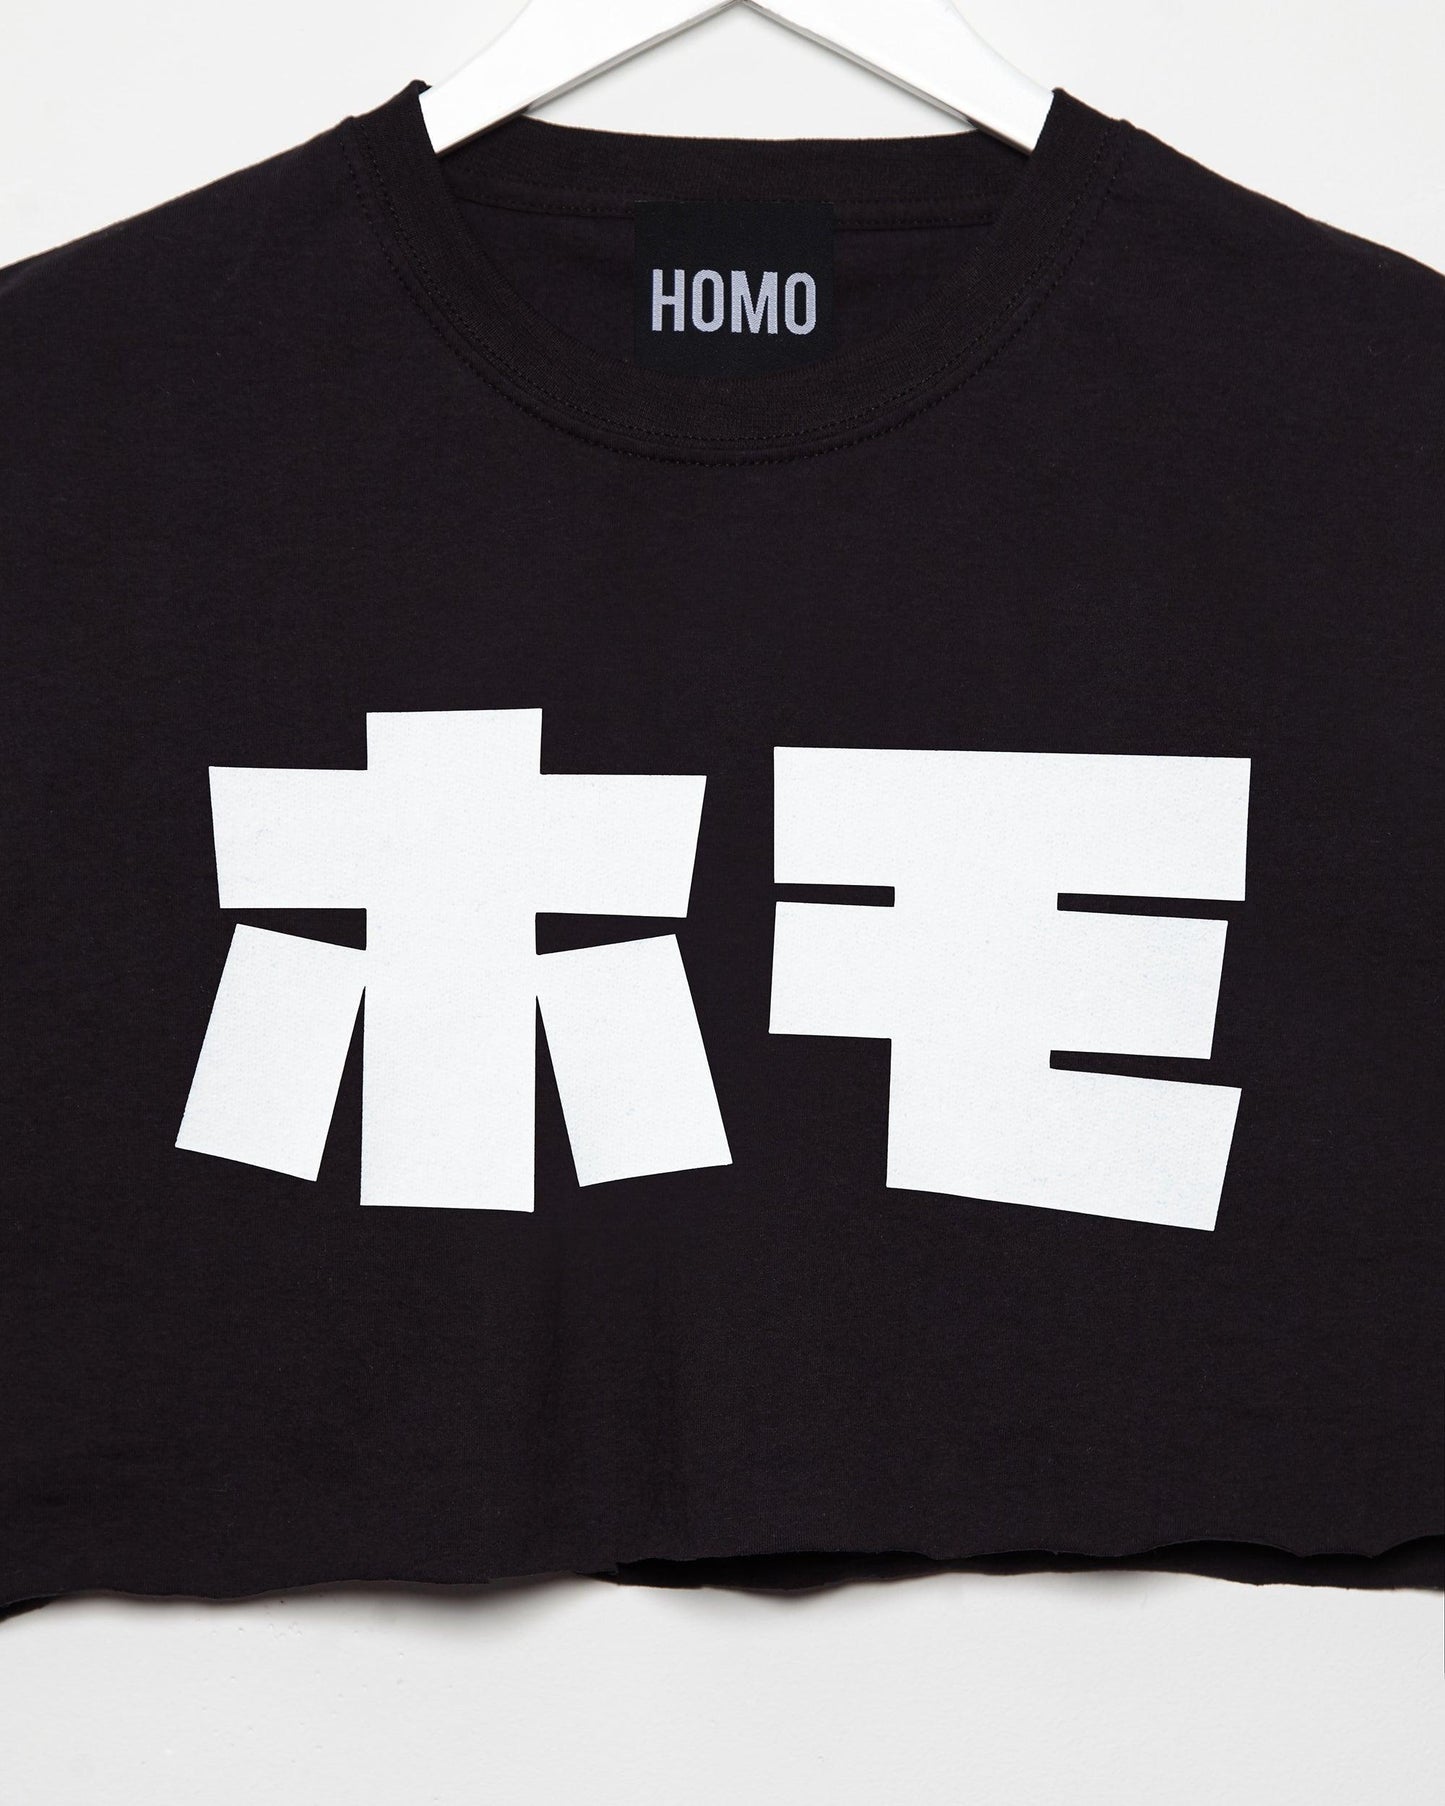 HOMO in Japanese, white on black - sleeveless crop top.